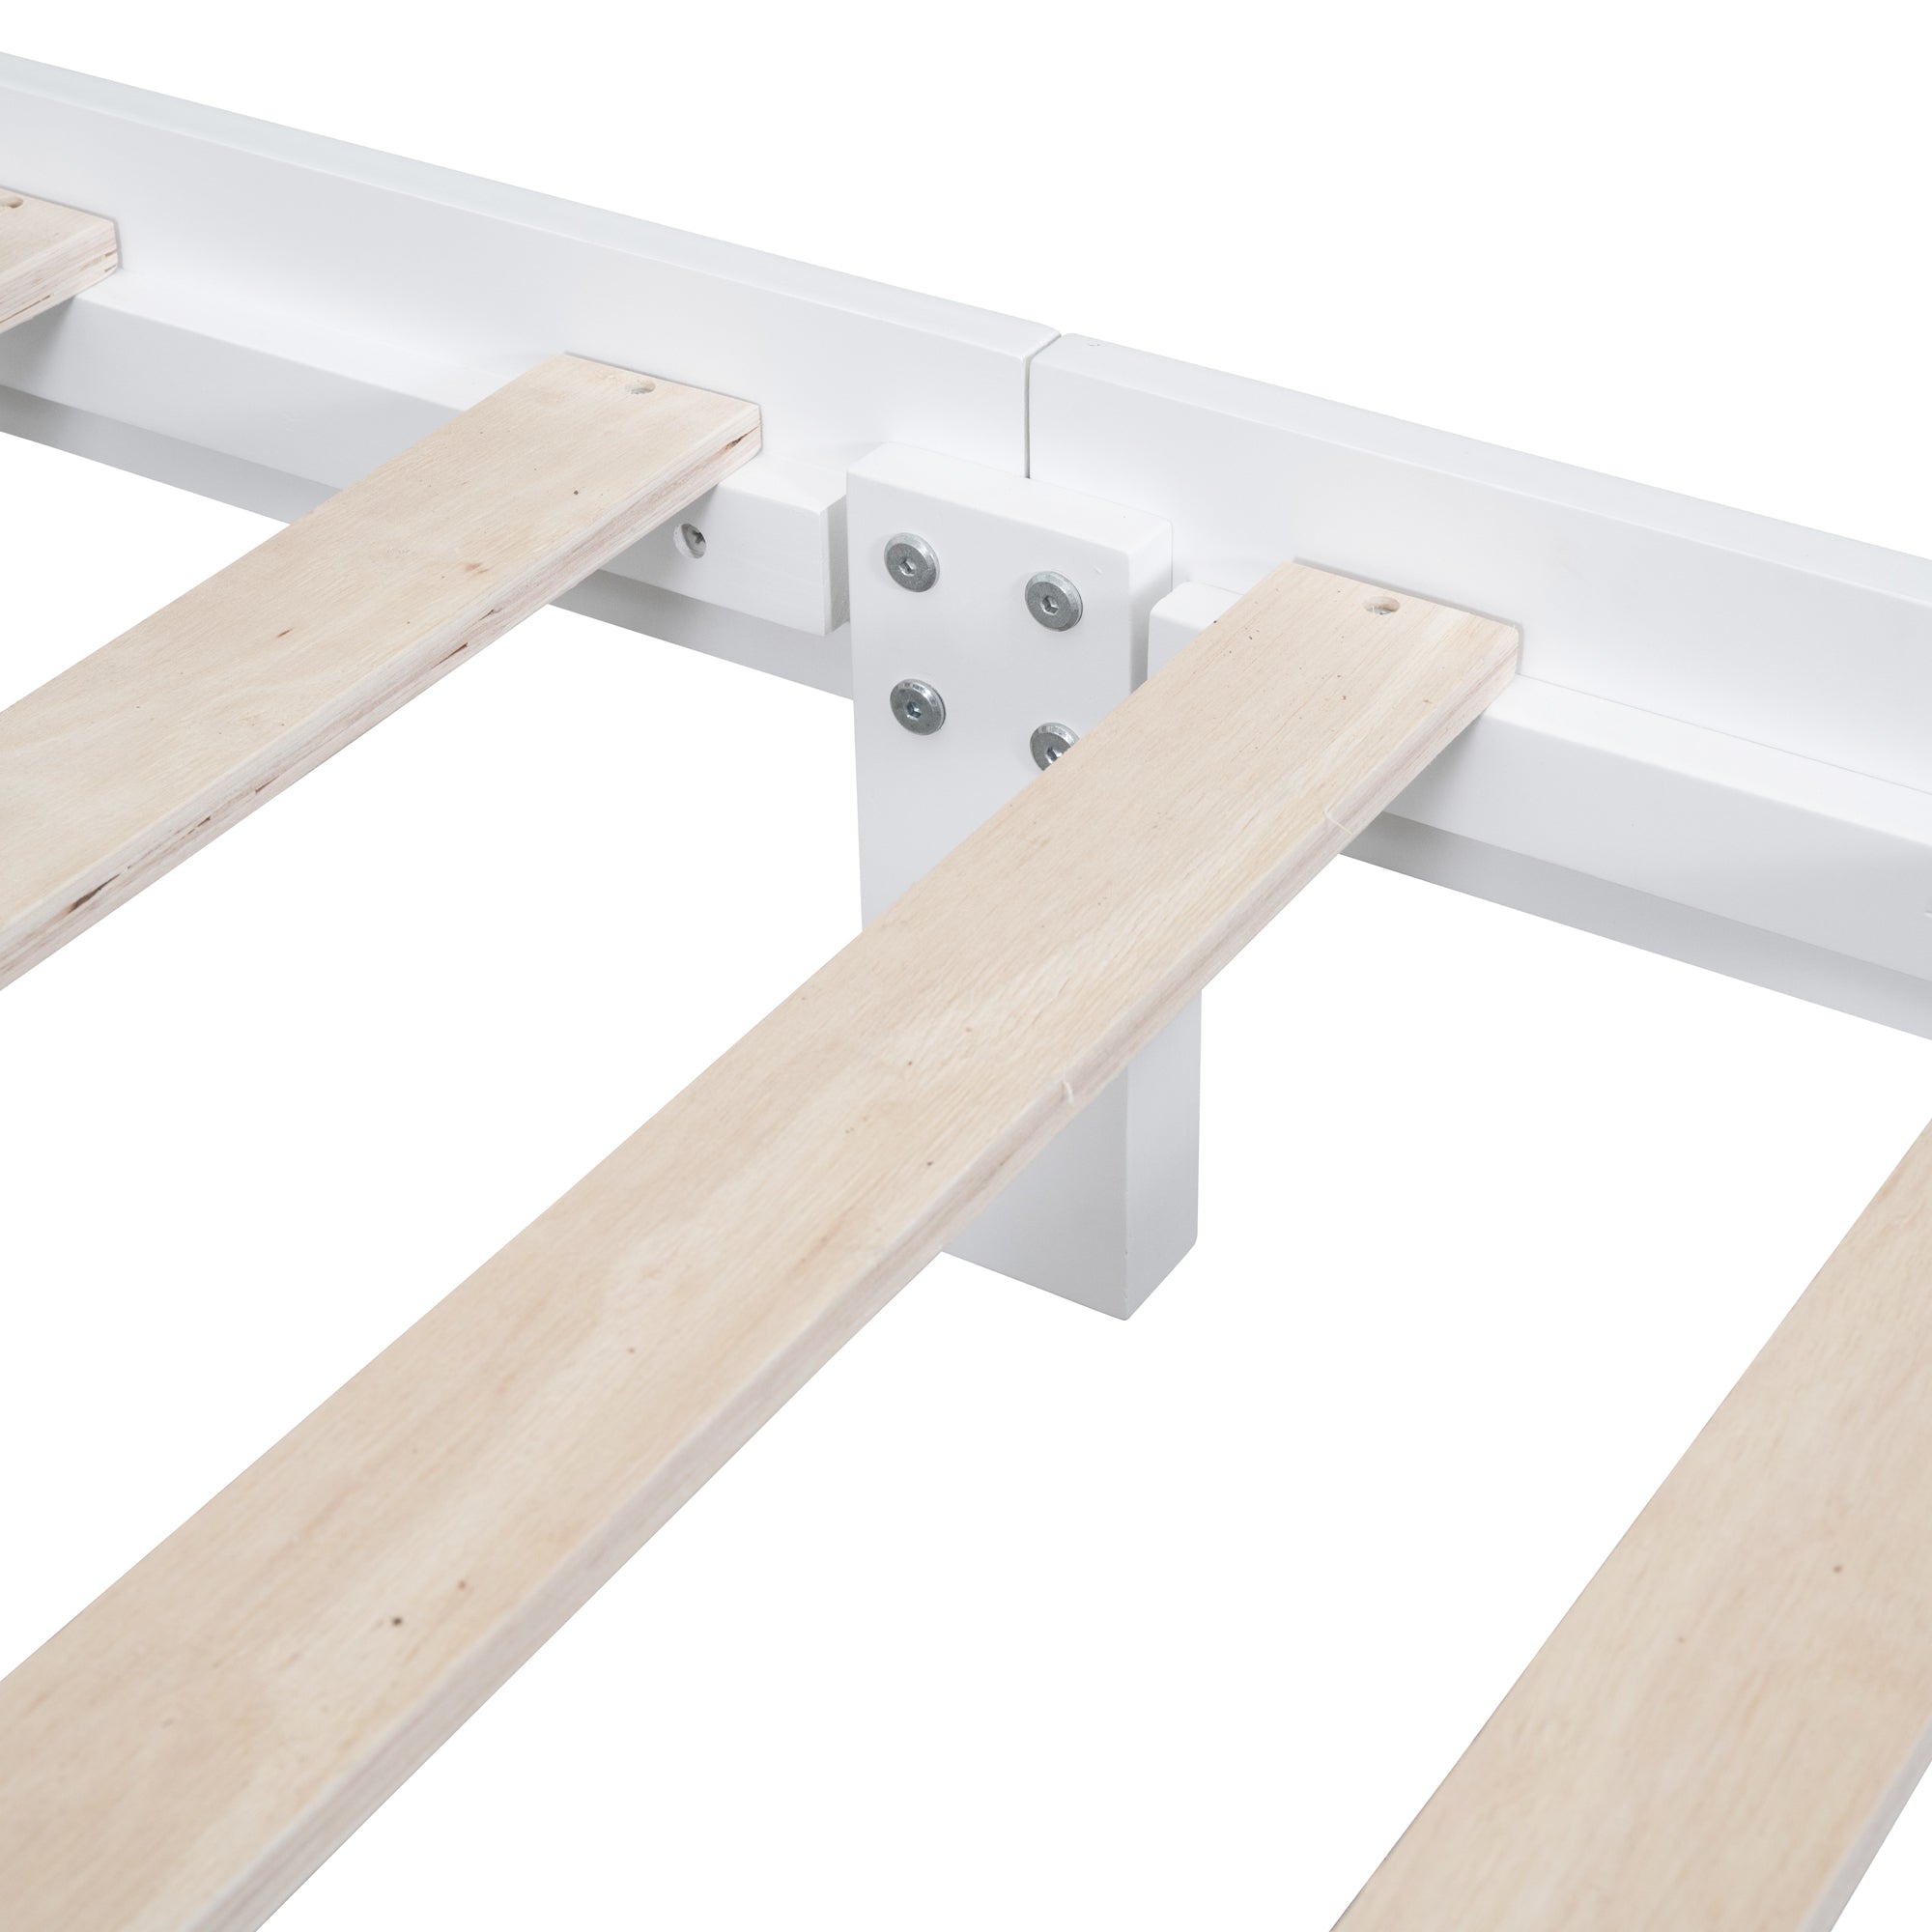 Full Size Wood Platform Bed Frame with Wooden Slat Support - White